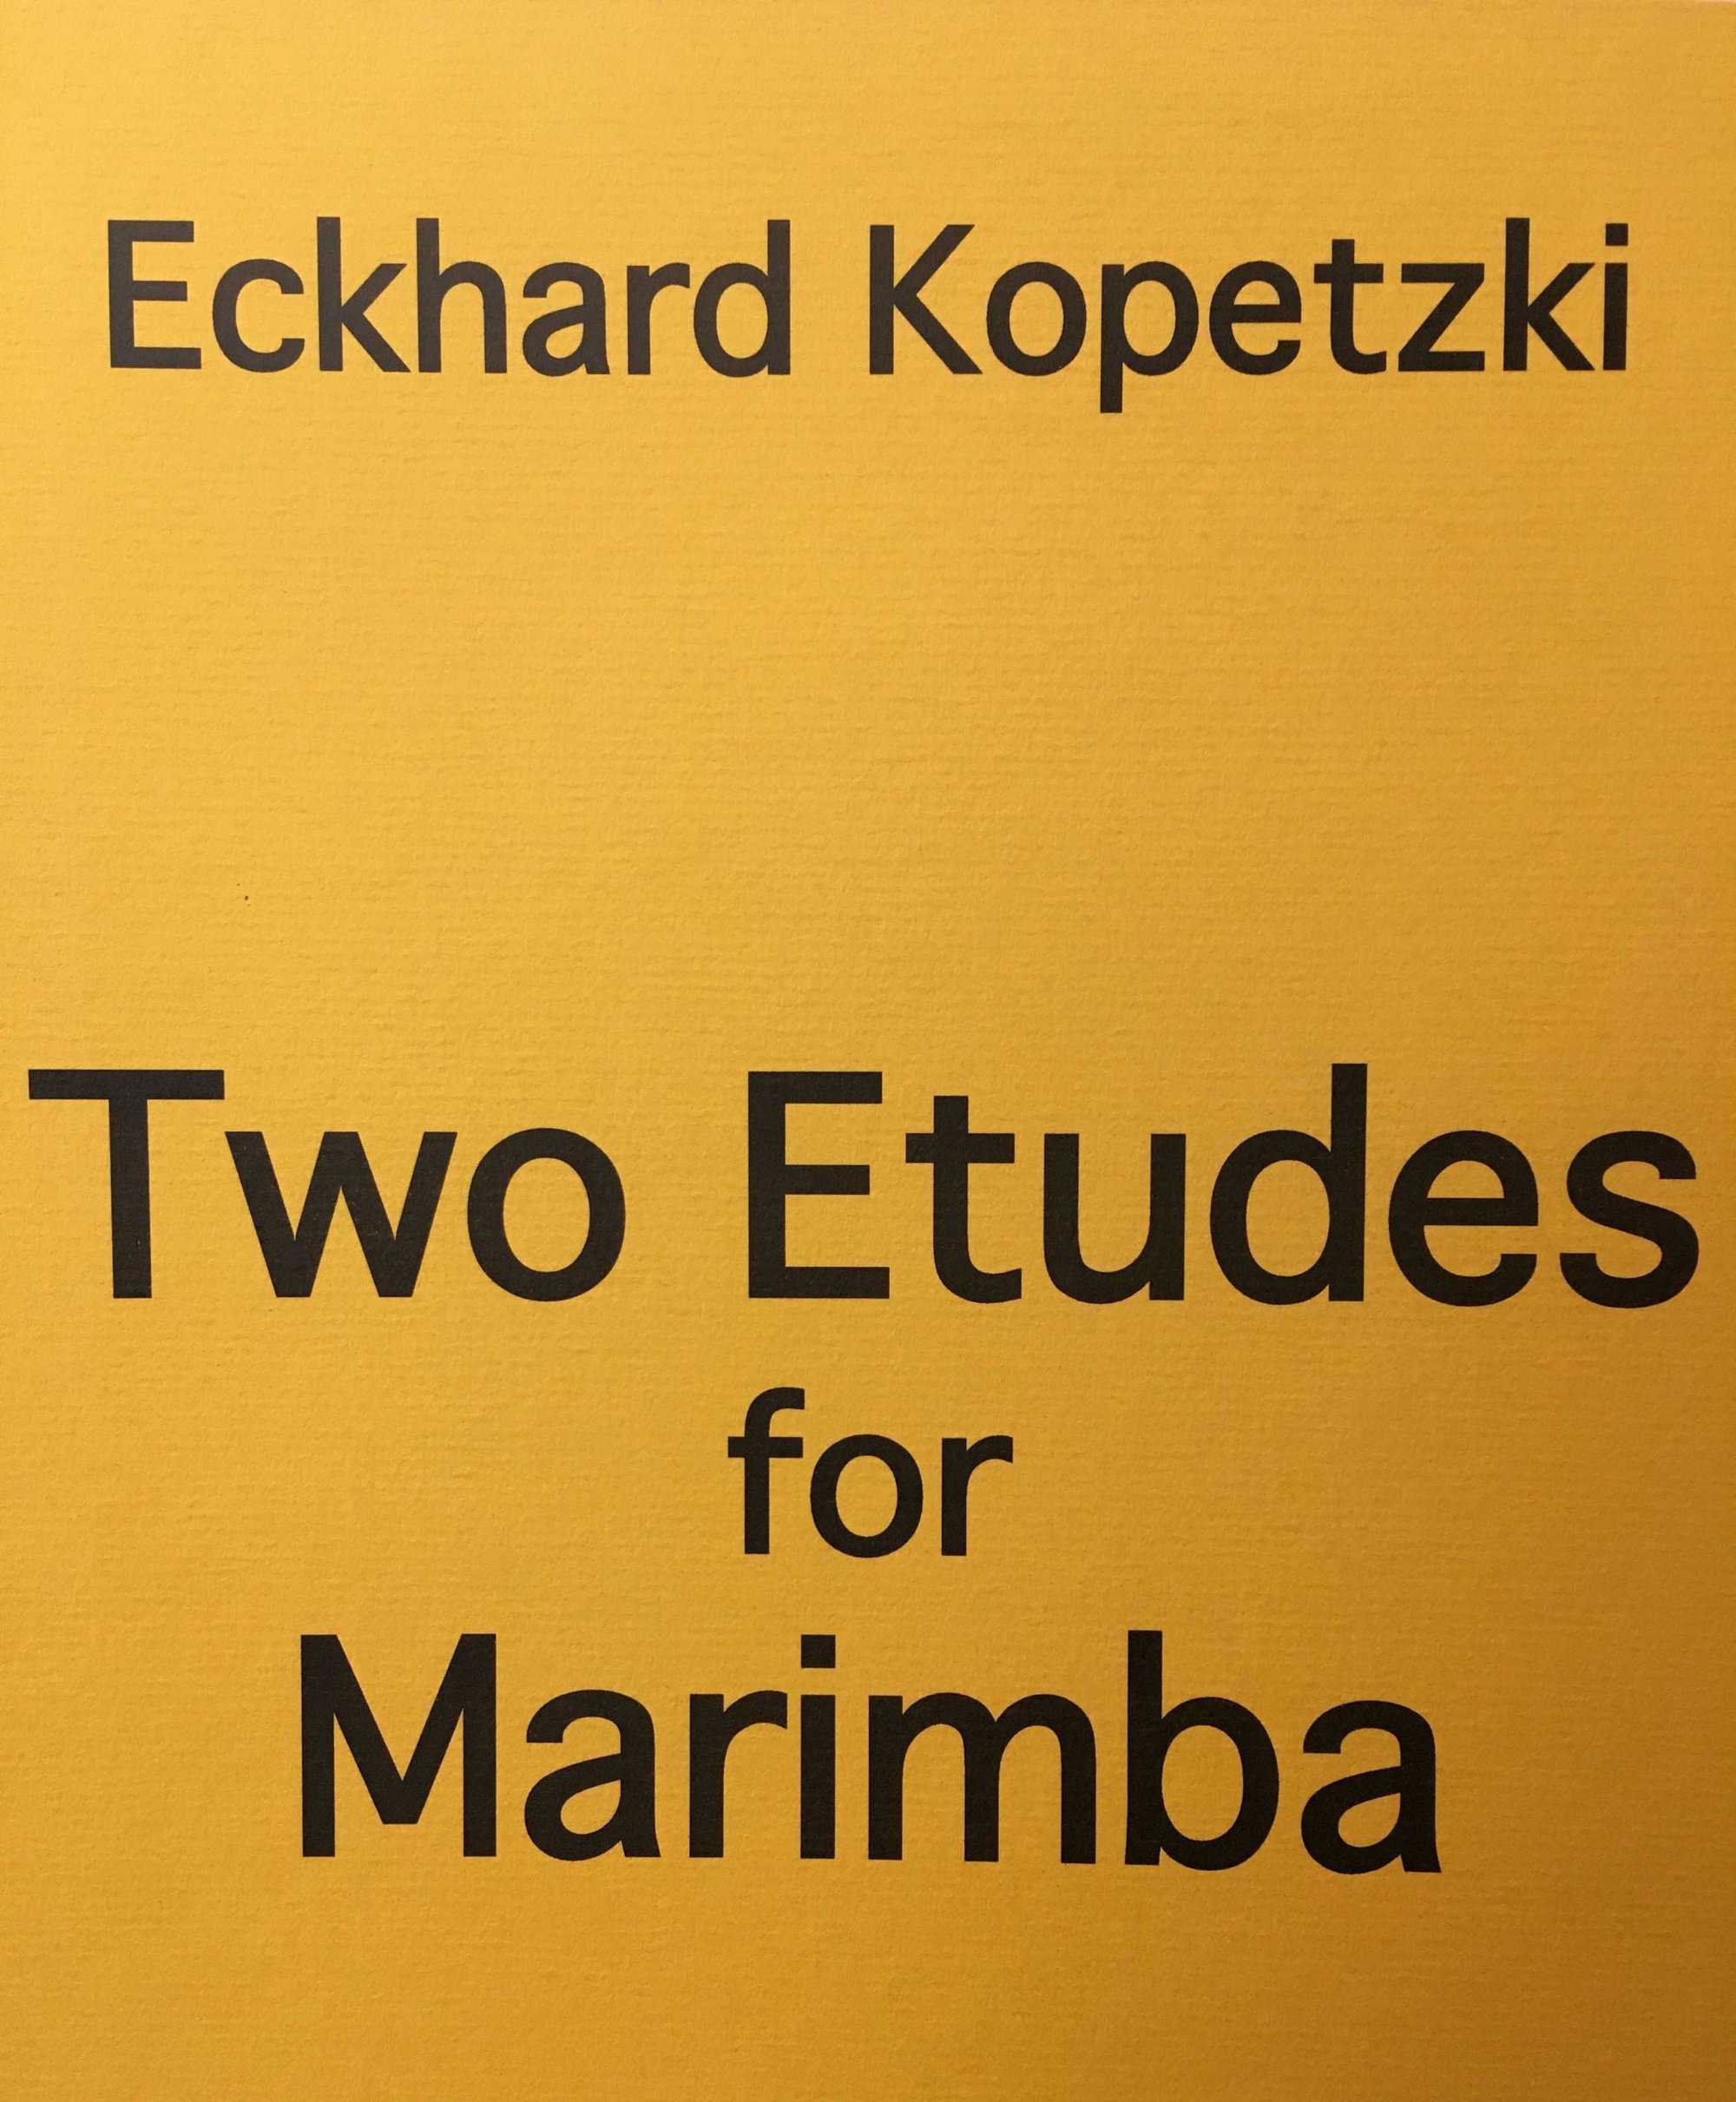 Two Etudes for Marimba by Eckhard Kopetzki